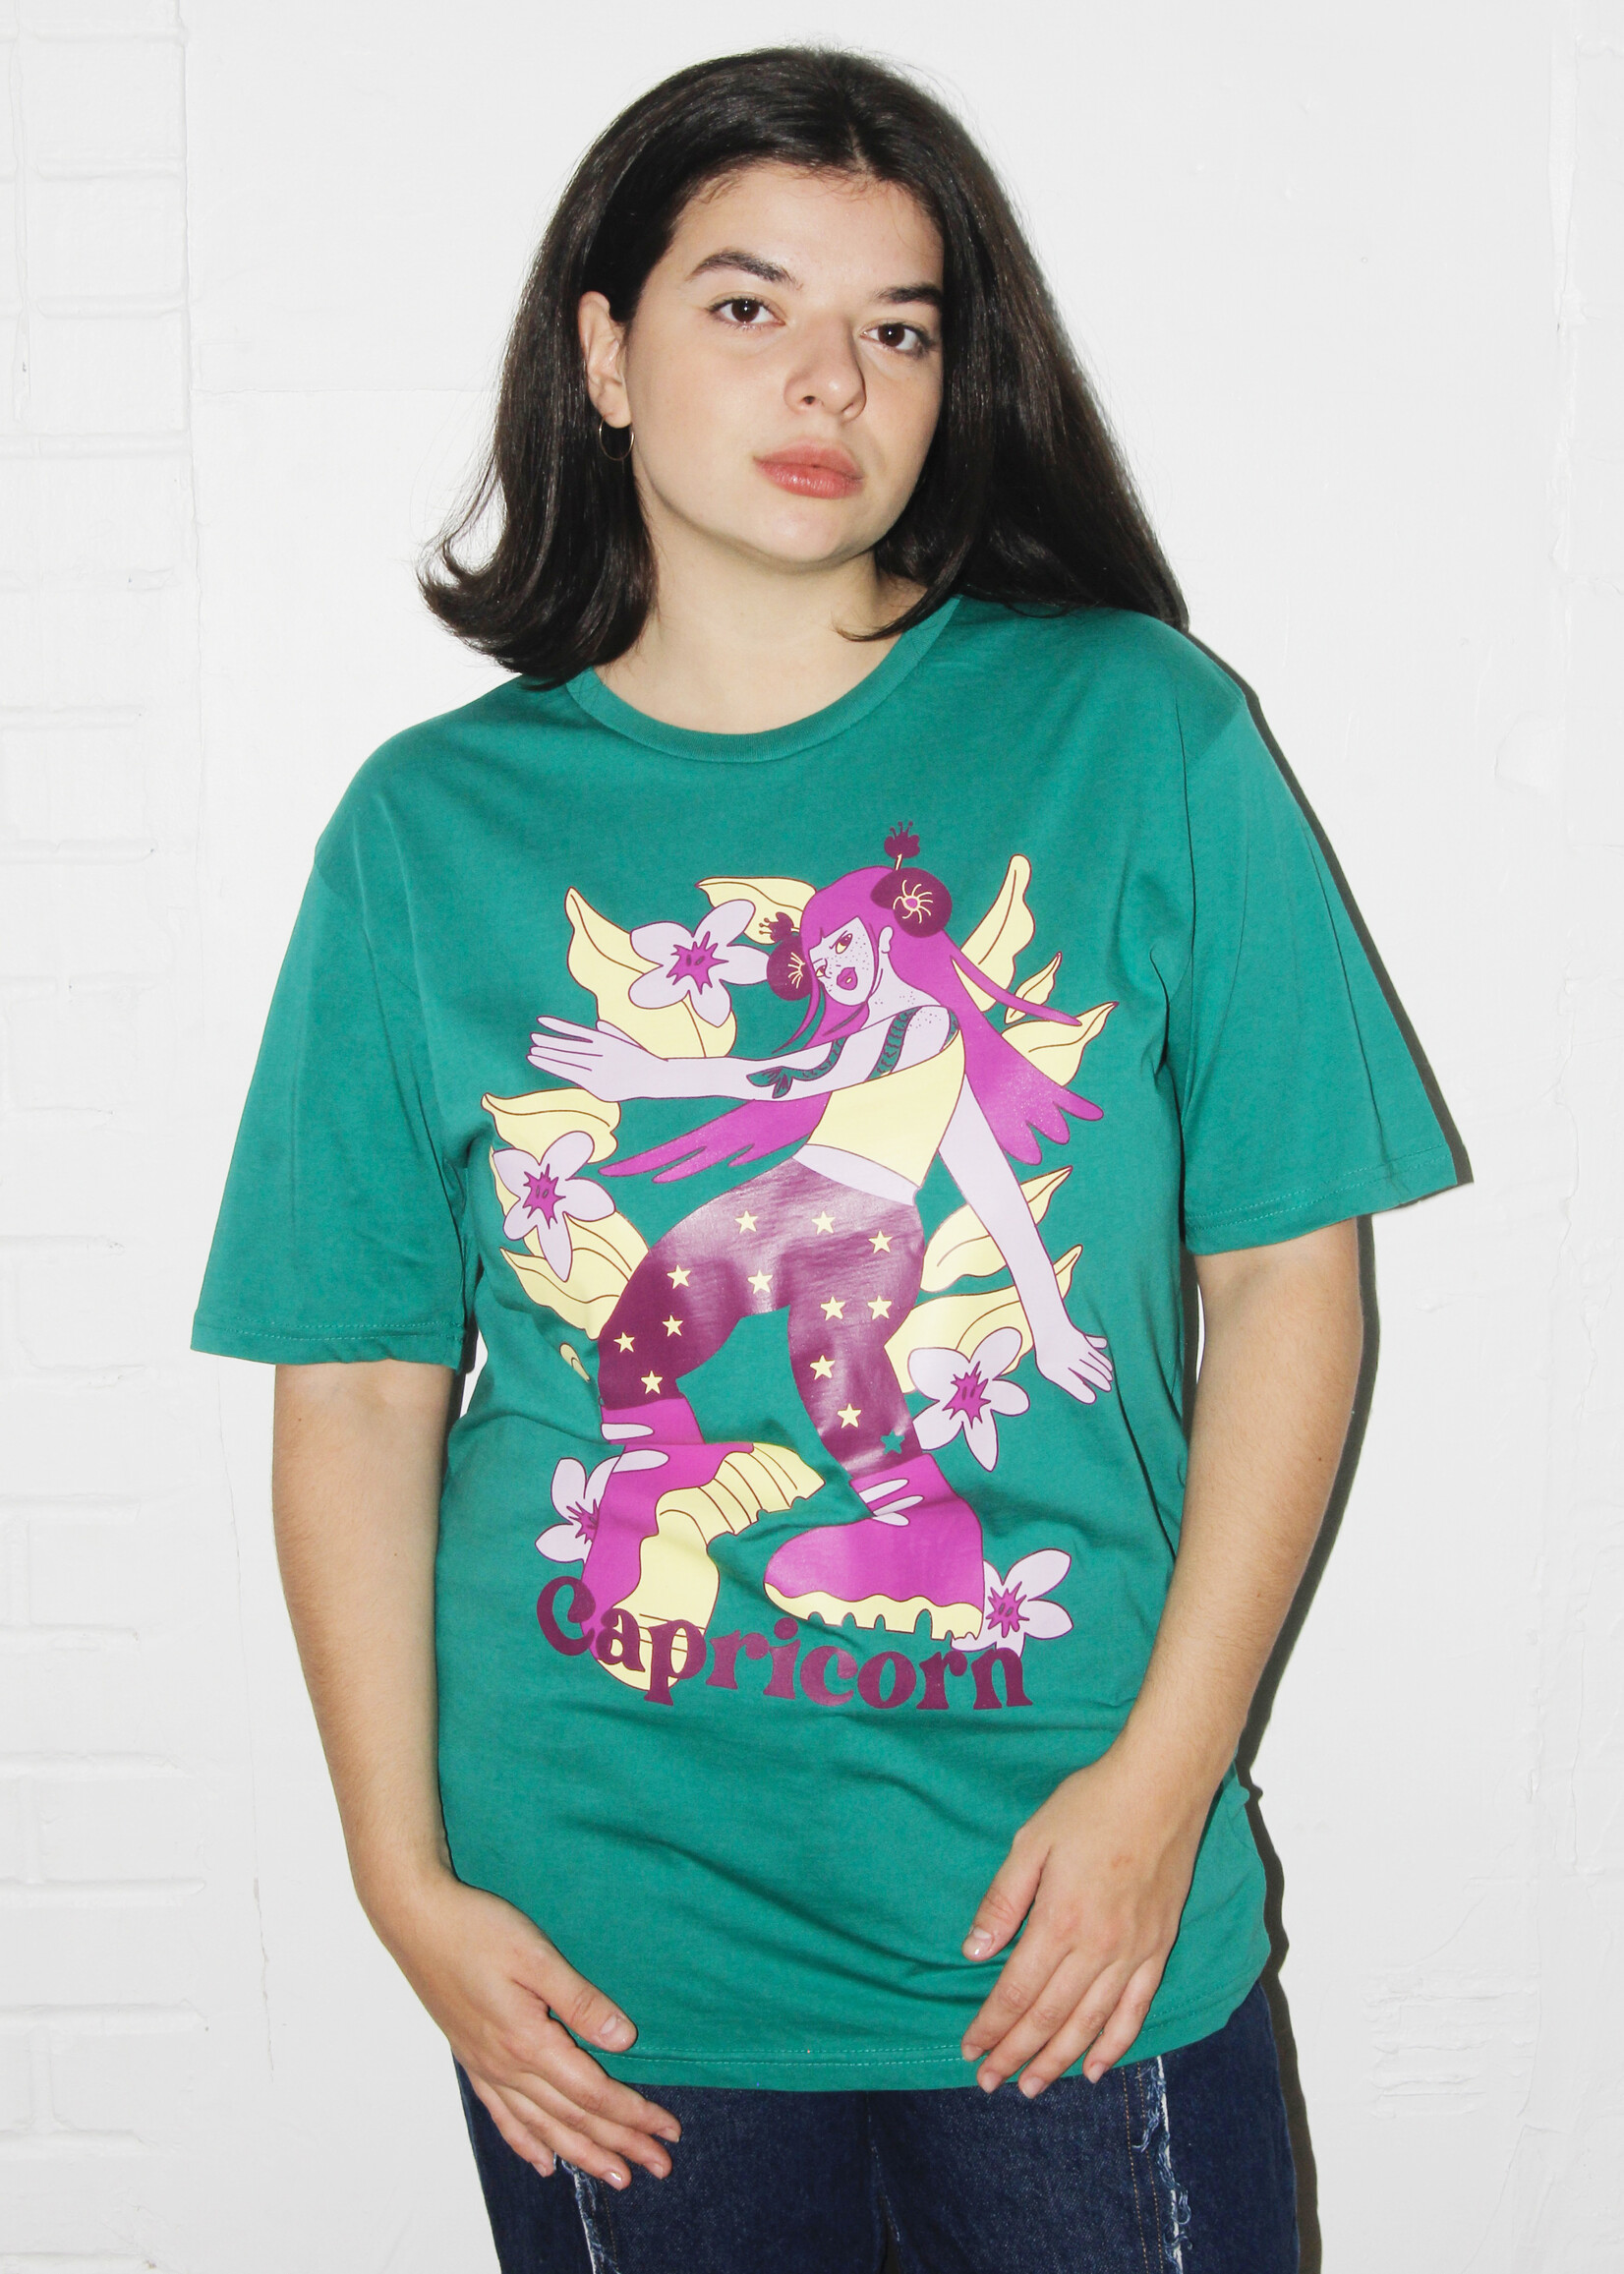 Spll Girl Spll Girl Zodiac T-Shirts: Capricorn